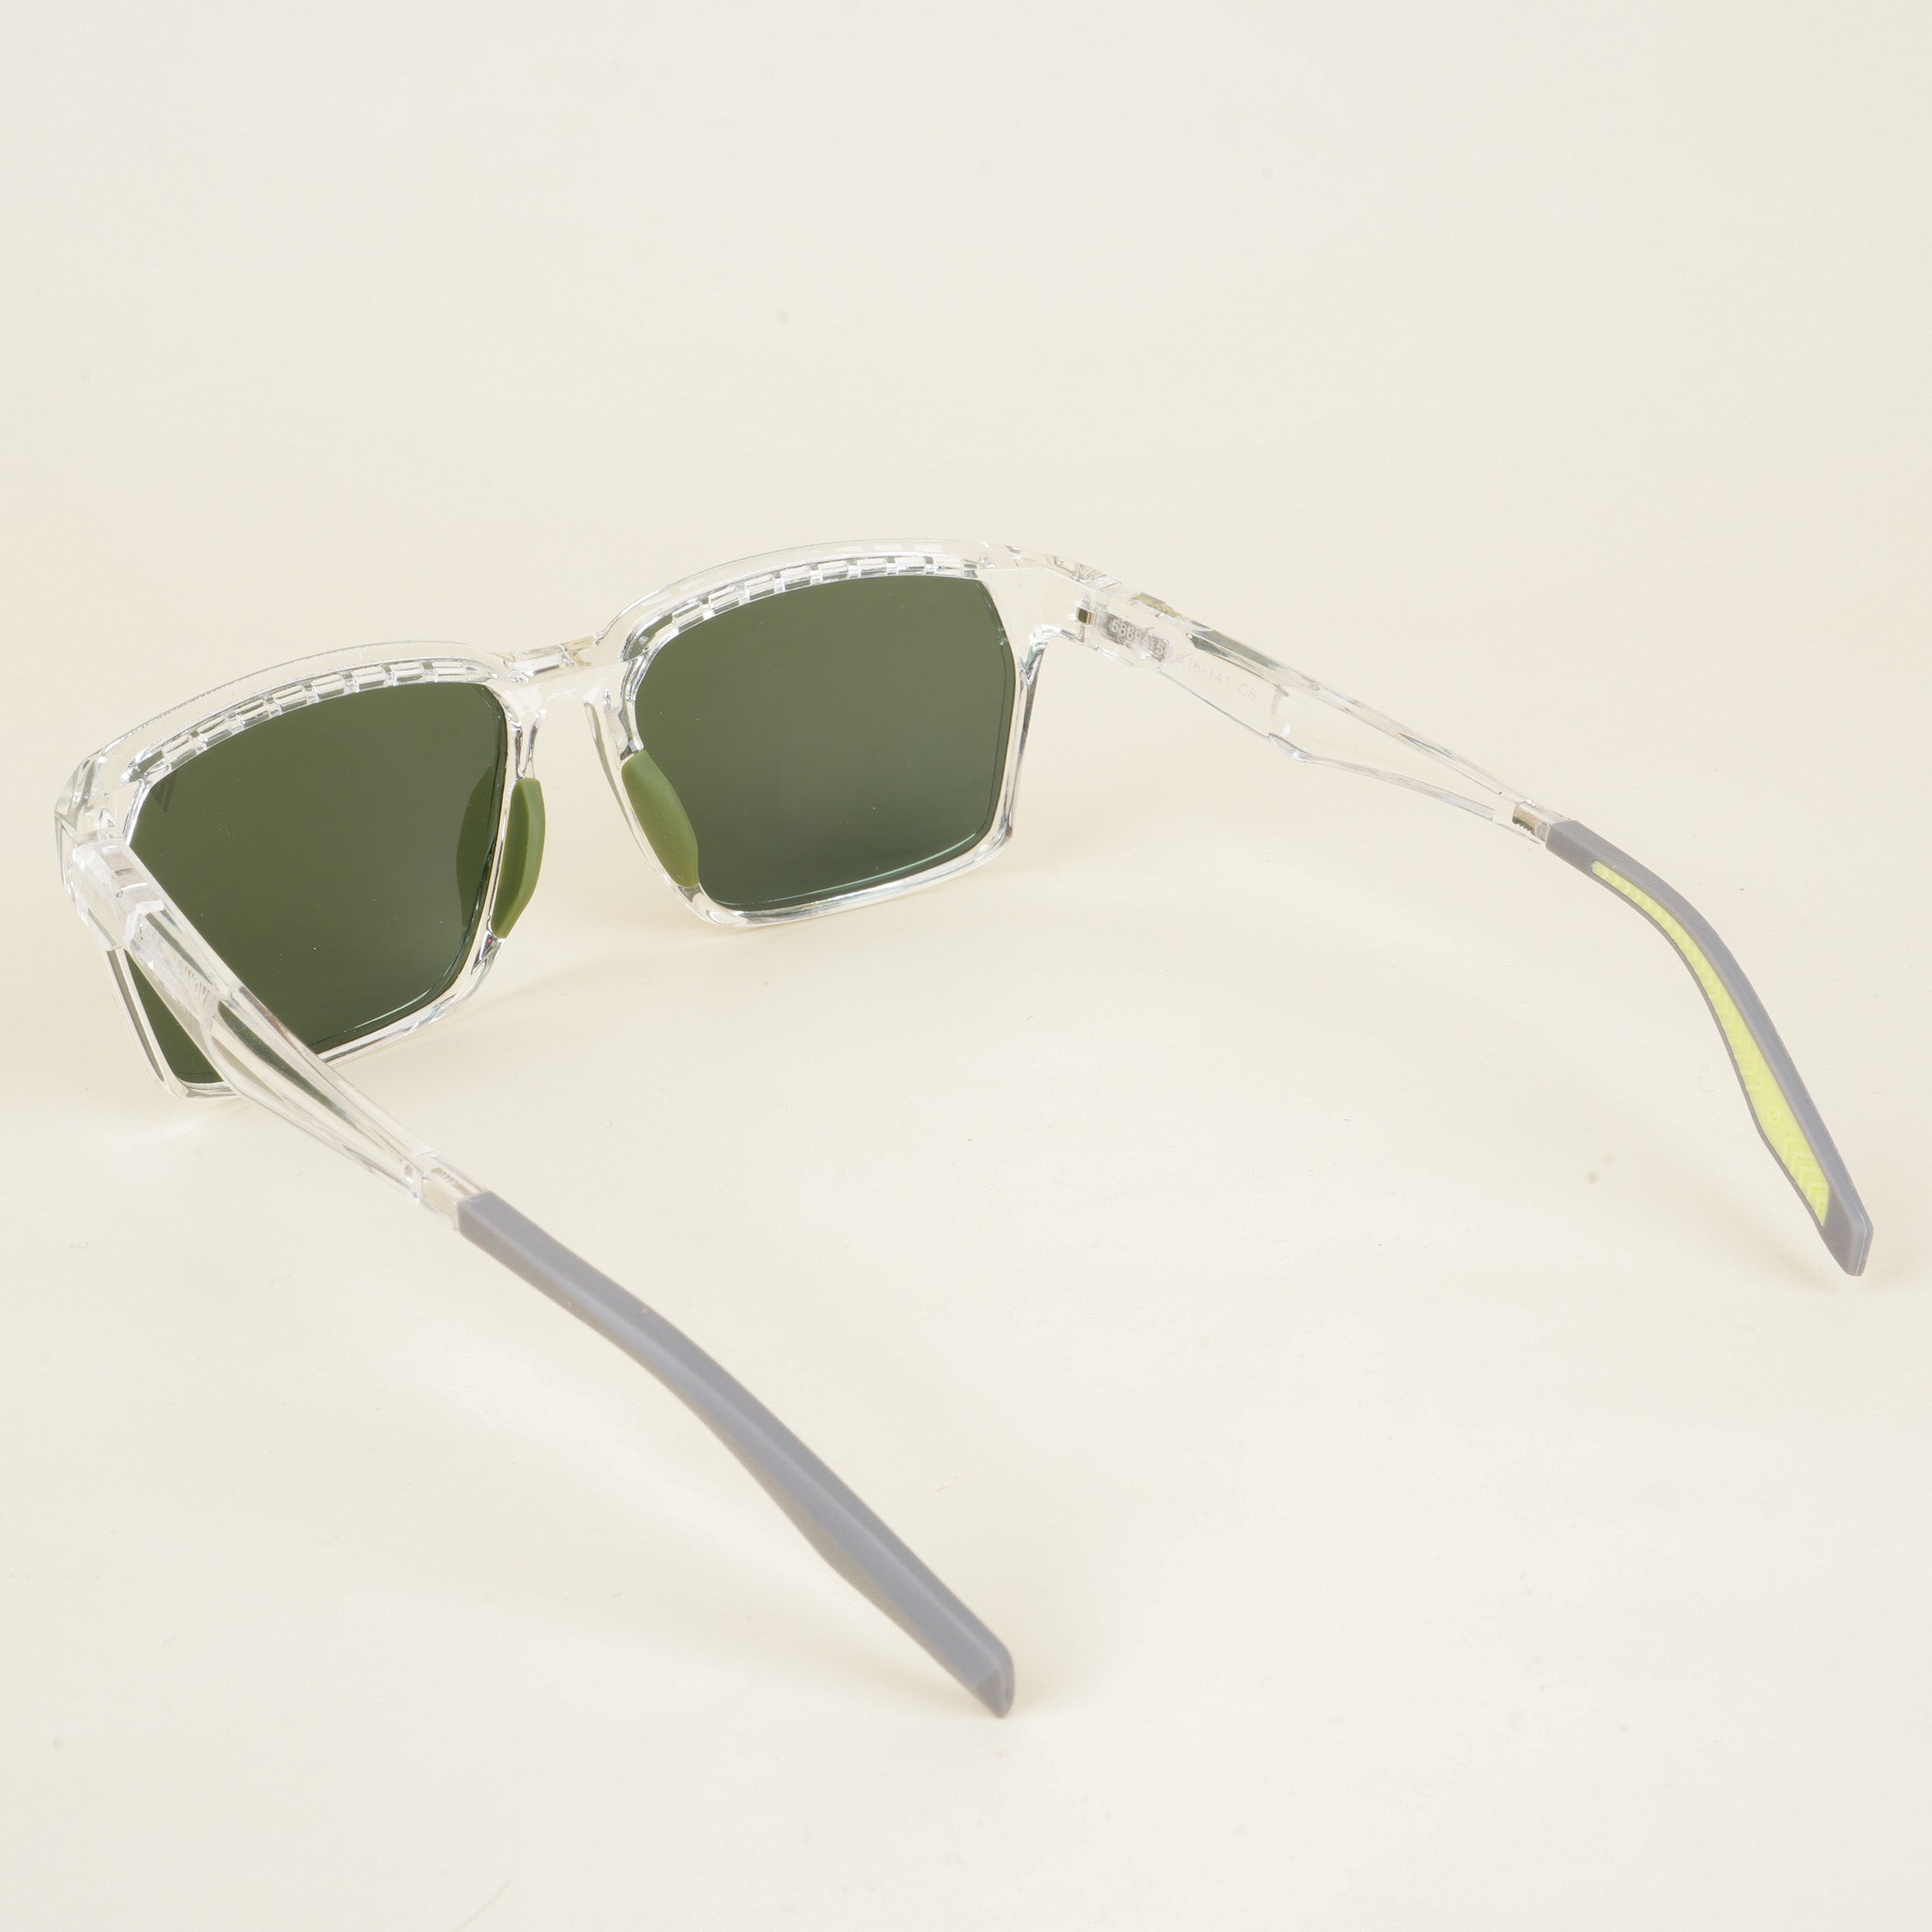 CHB Green Lens Polarized SUN Men/Women Sunglasses - $14.99 : STORE_NAME